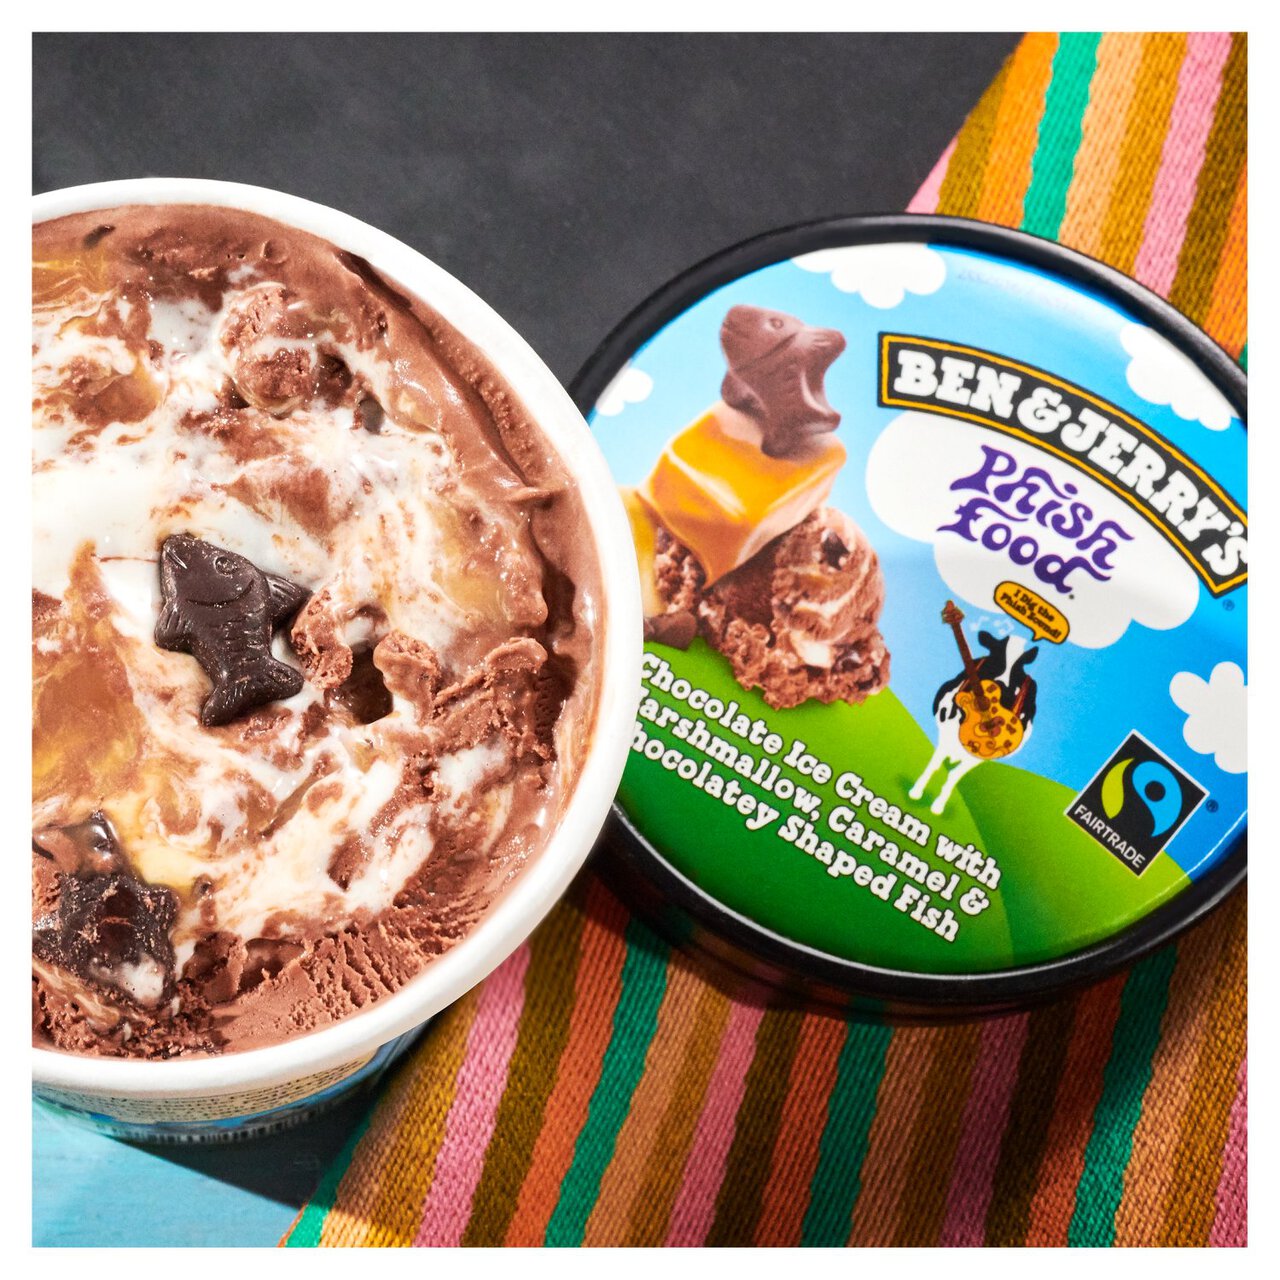 Ben & Jerry's Phish Food Chocolate Ice Cream Tub 465ml